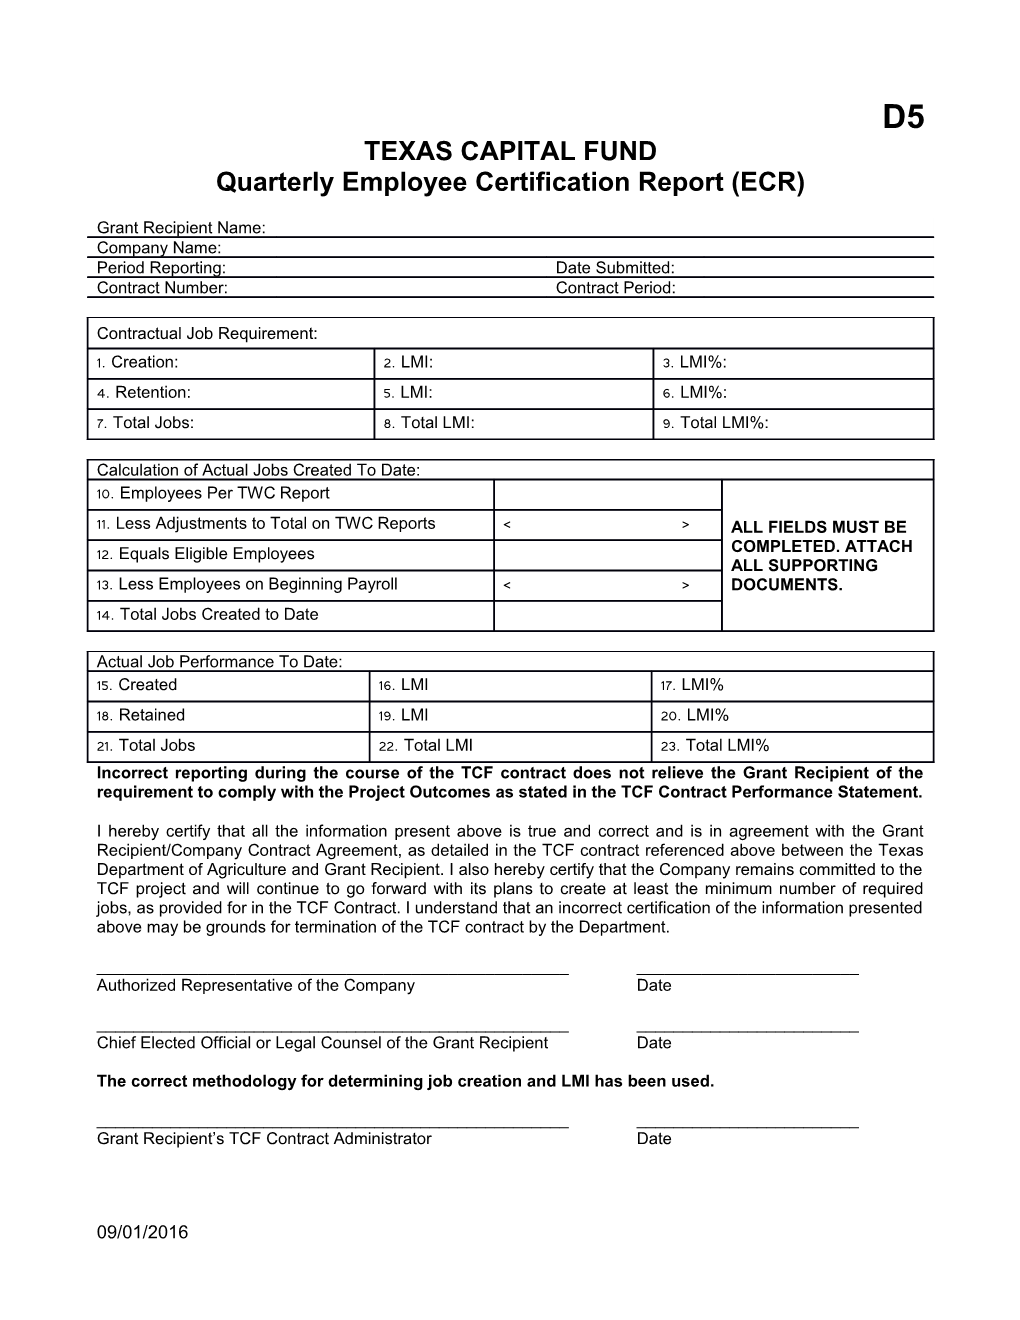 Quarterly Employee Certification Report (ECR)